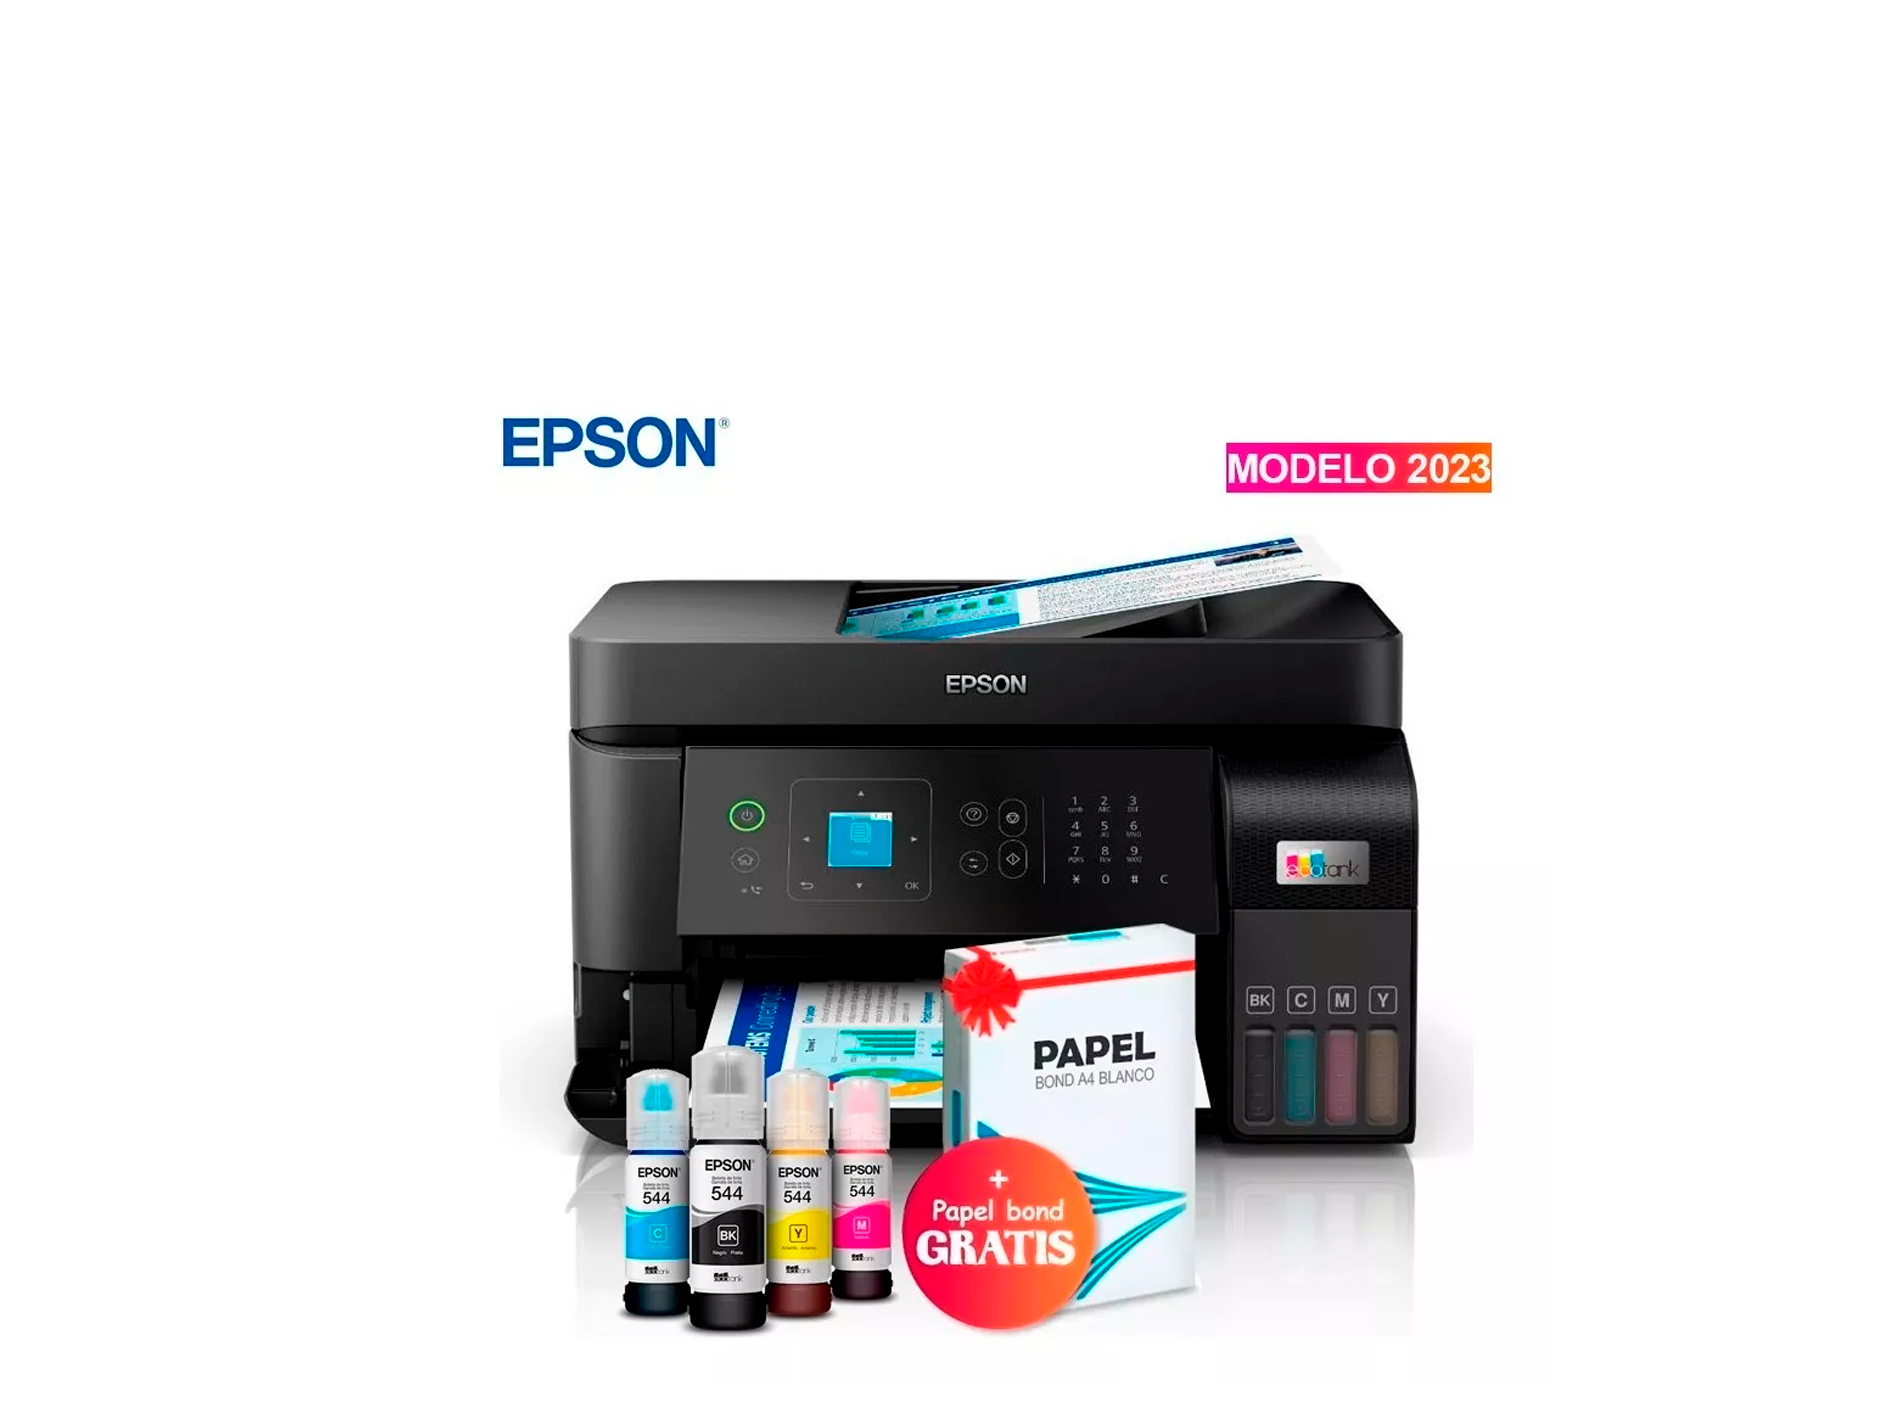 Impresora Multifuncional Epson EcoTank L5590 WiFi Negro Color